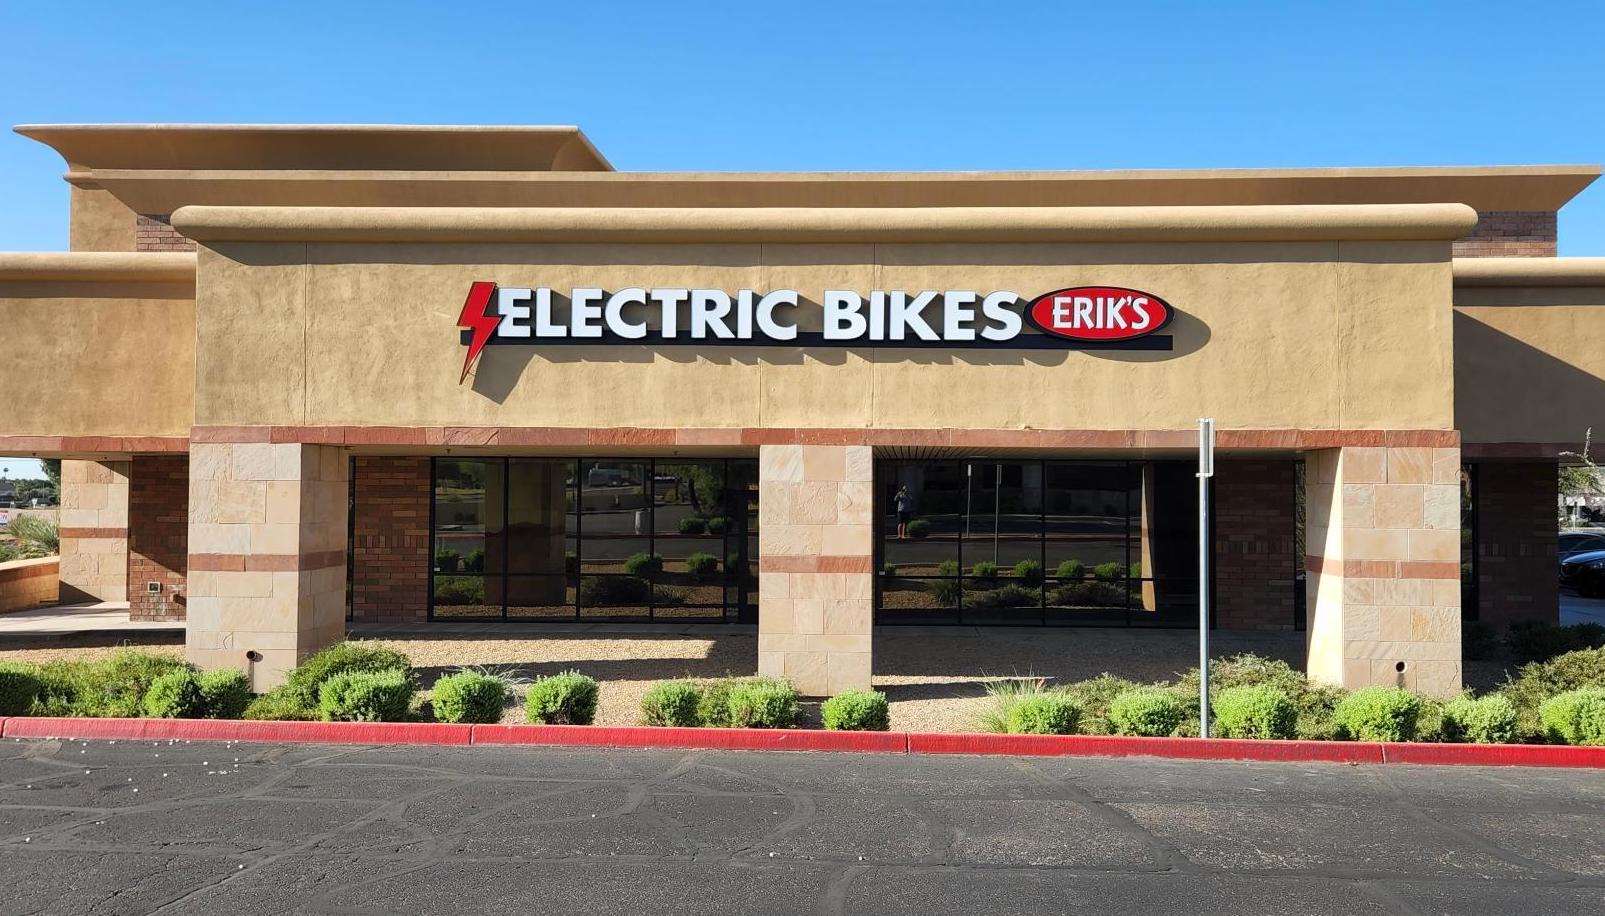 ERIK'S Electric Bikes Scottsdale, Arizona